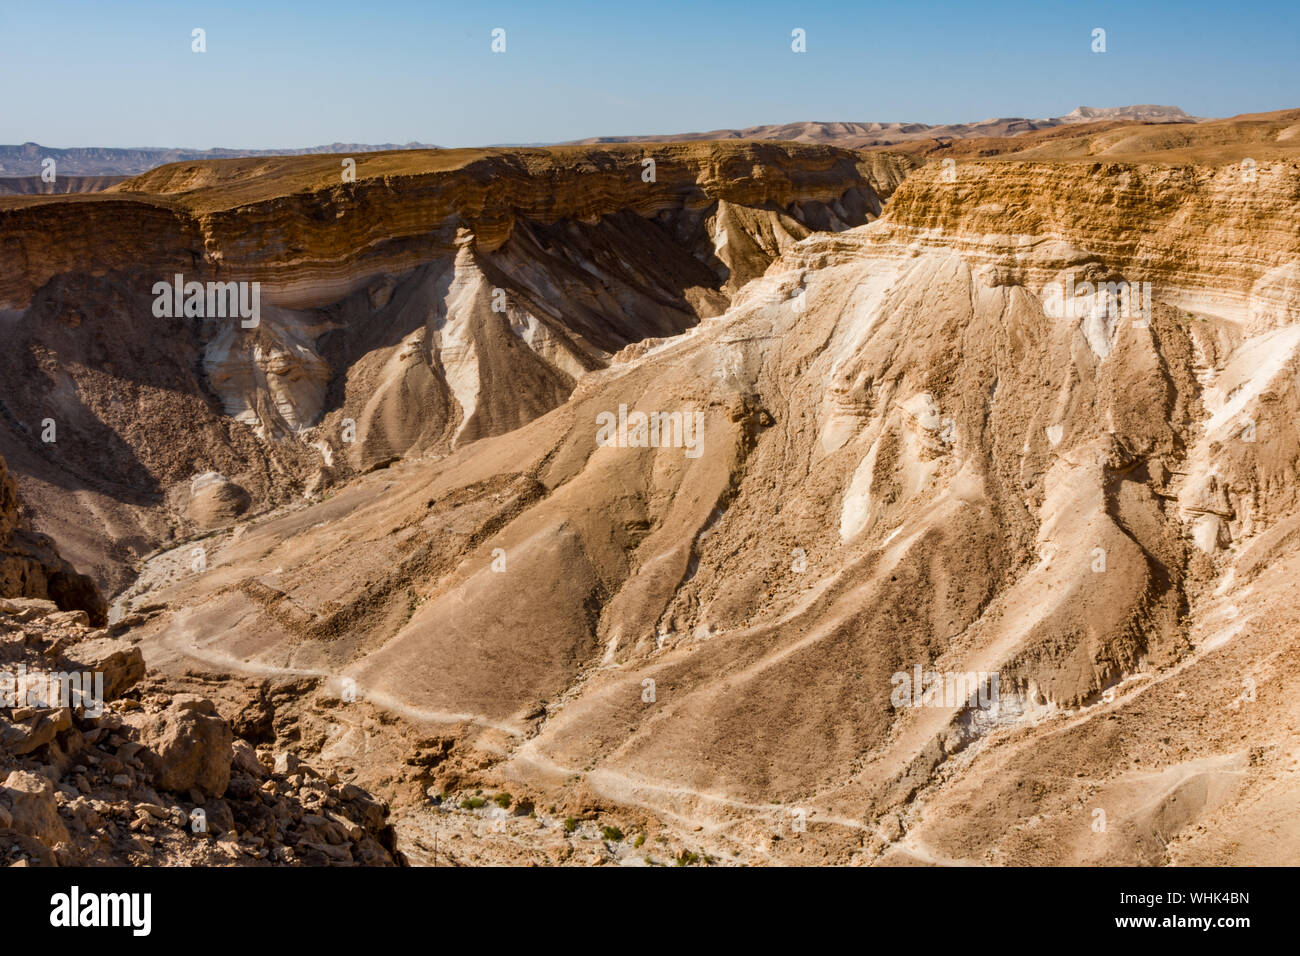 Extreme Terrain Near Dead Sea In Israel Stock Photo